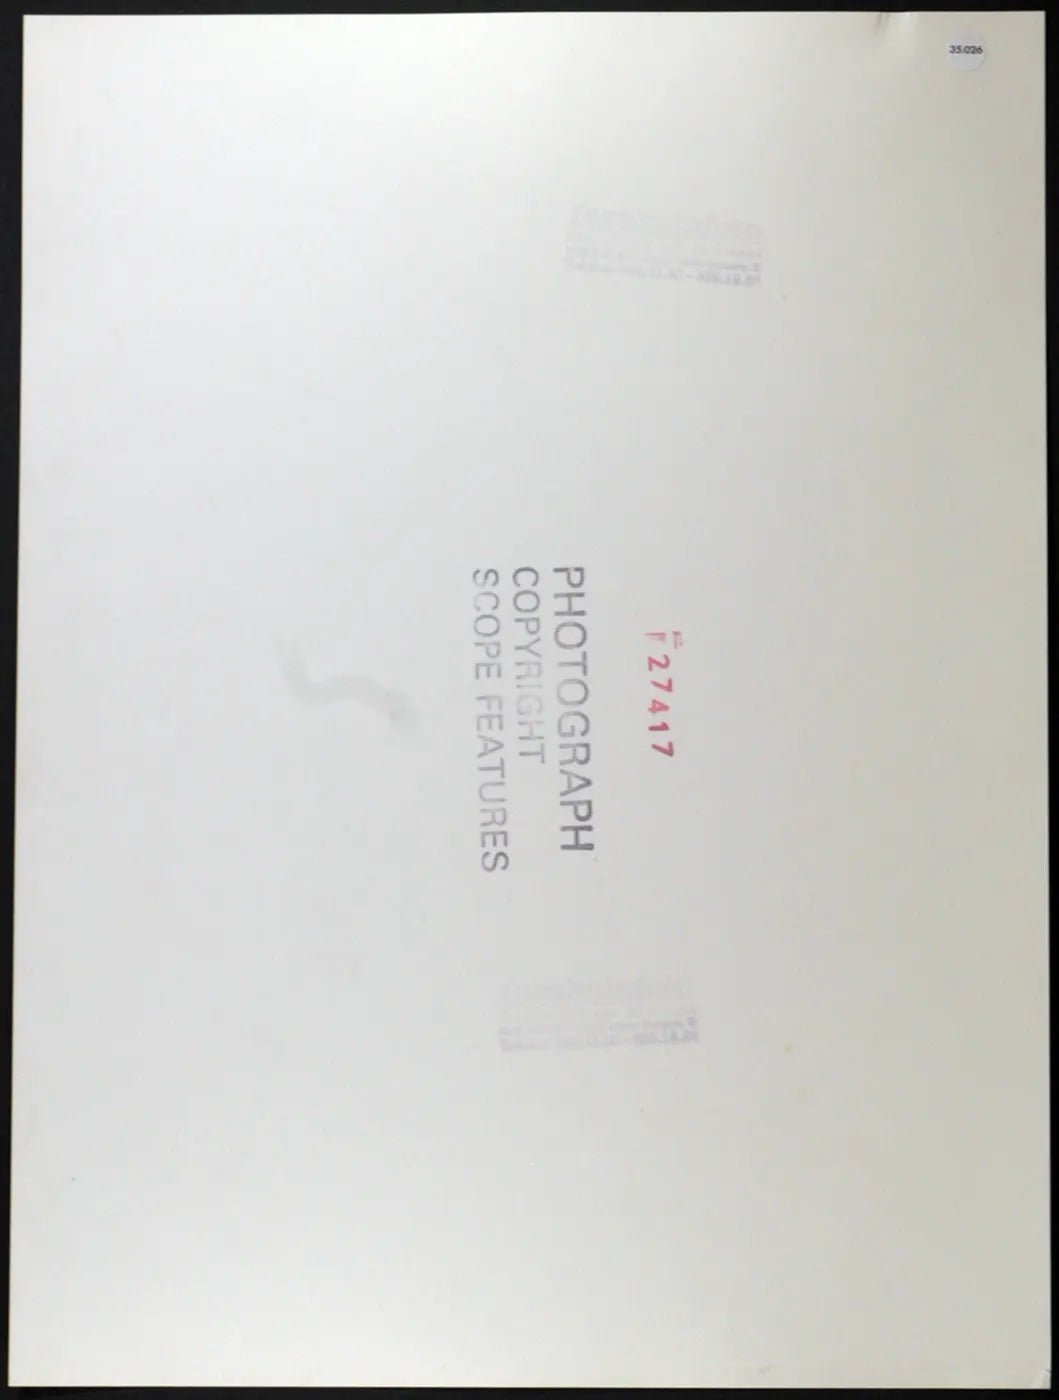 Robert Downey Jr. Cybill Shepherd Ft 35026 - Stampa 27x37 cm - Farabola Stampa ai sali d'argento